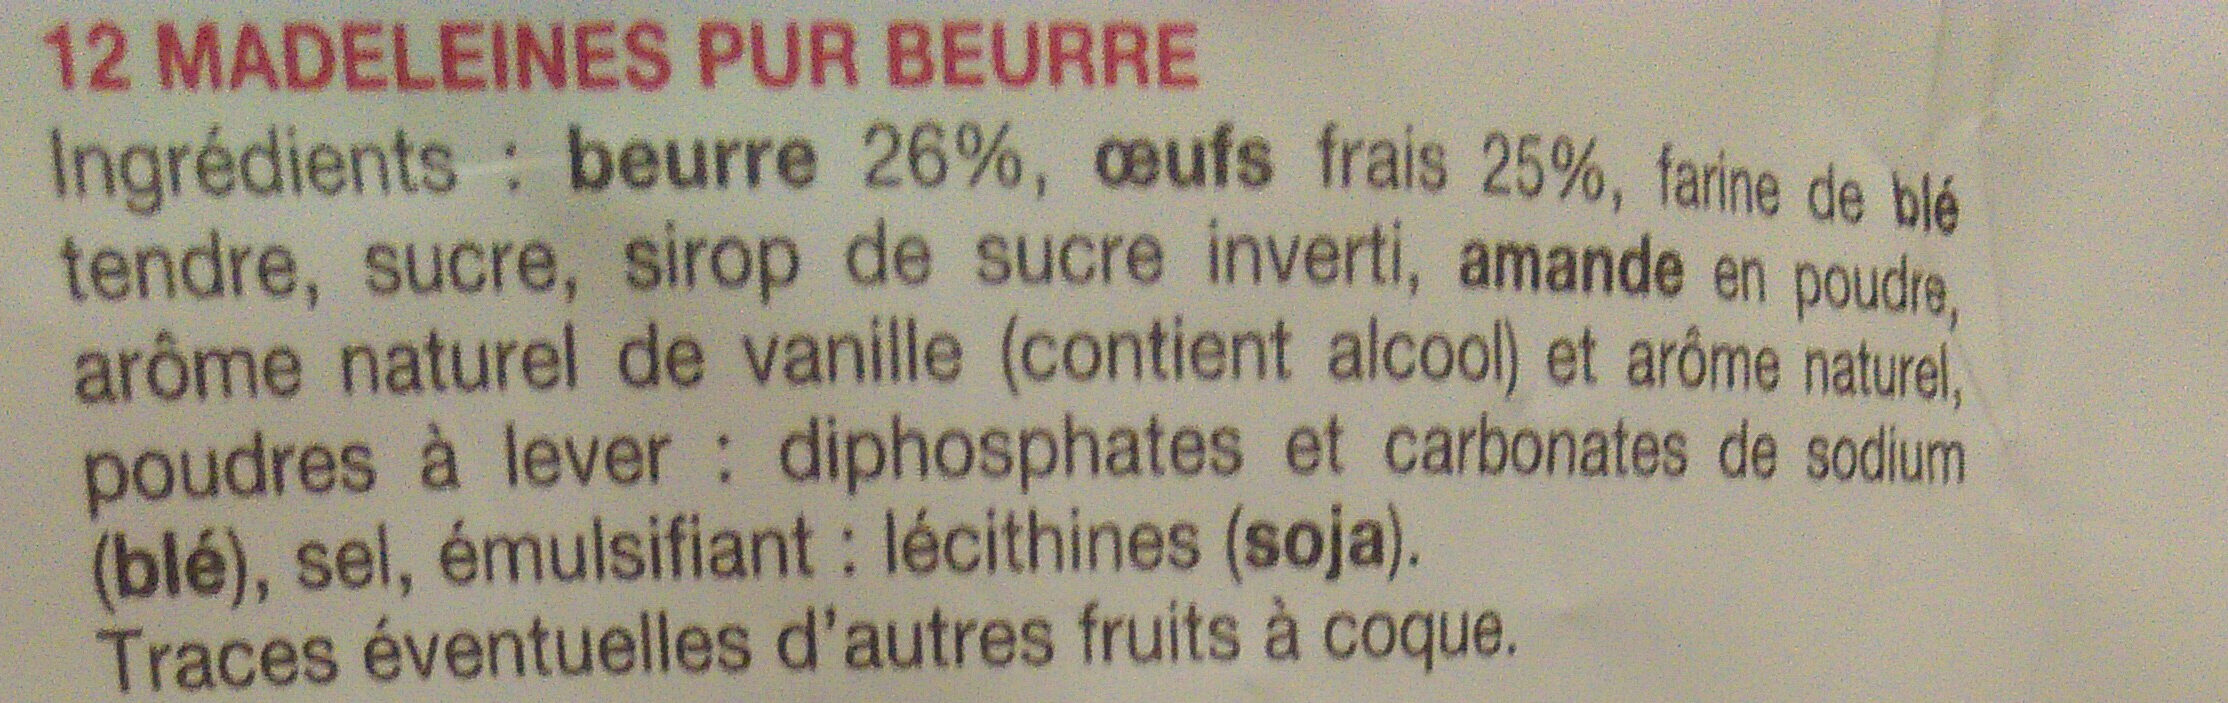 La Madeleine Pur beurre - Ingredients - fr